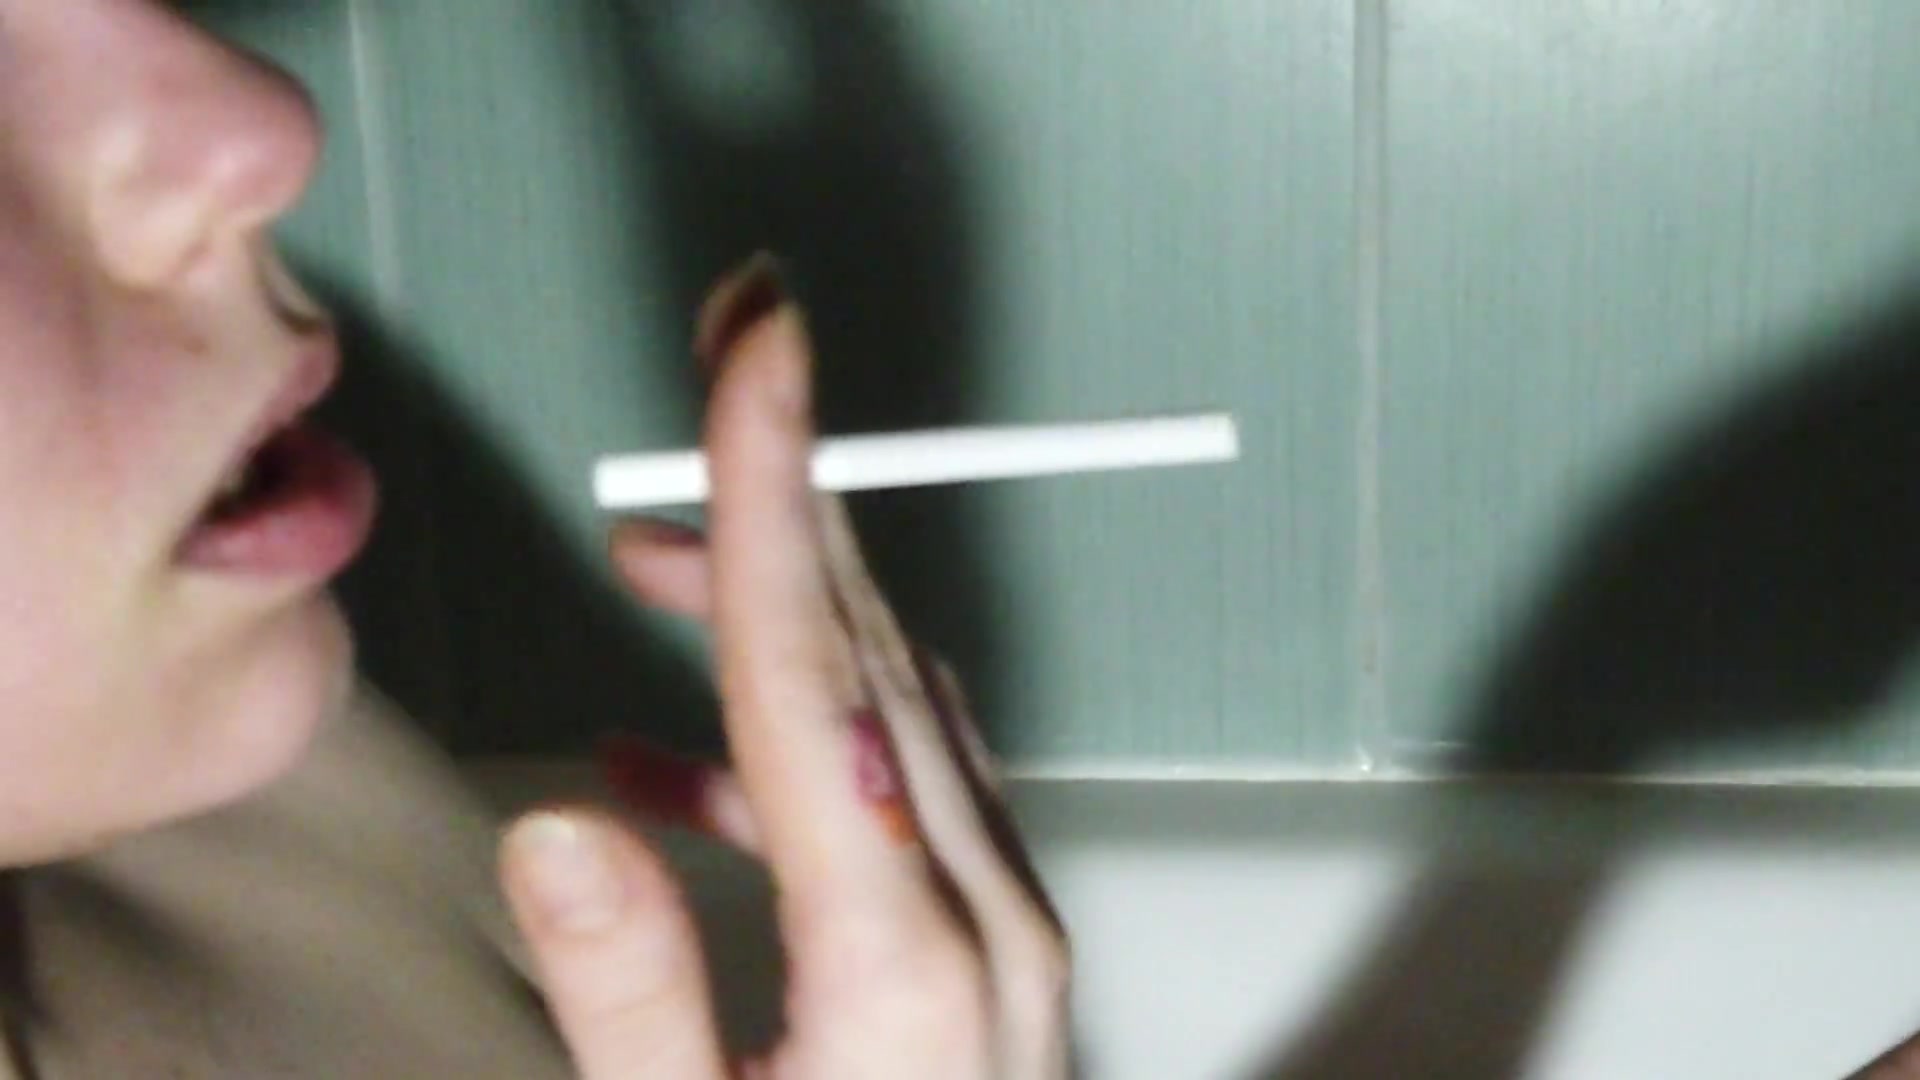 XcreaMMollyX – Smoking Girl In Slow Motion. Lips